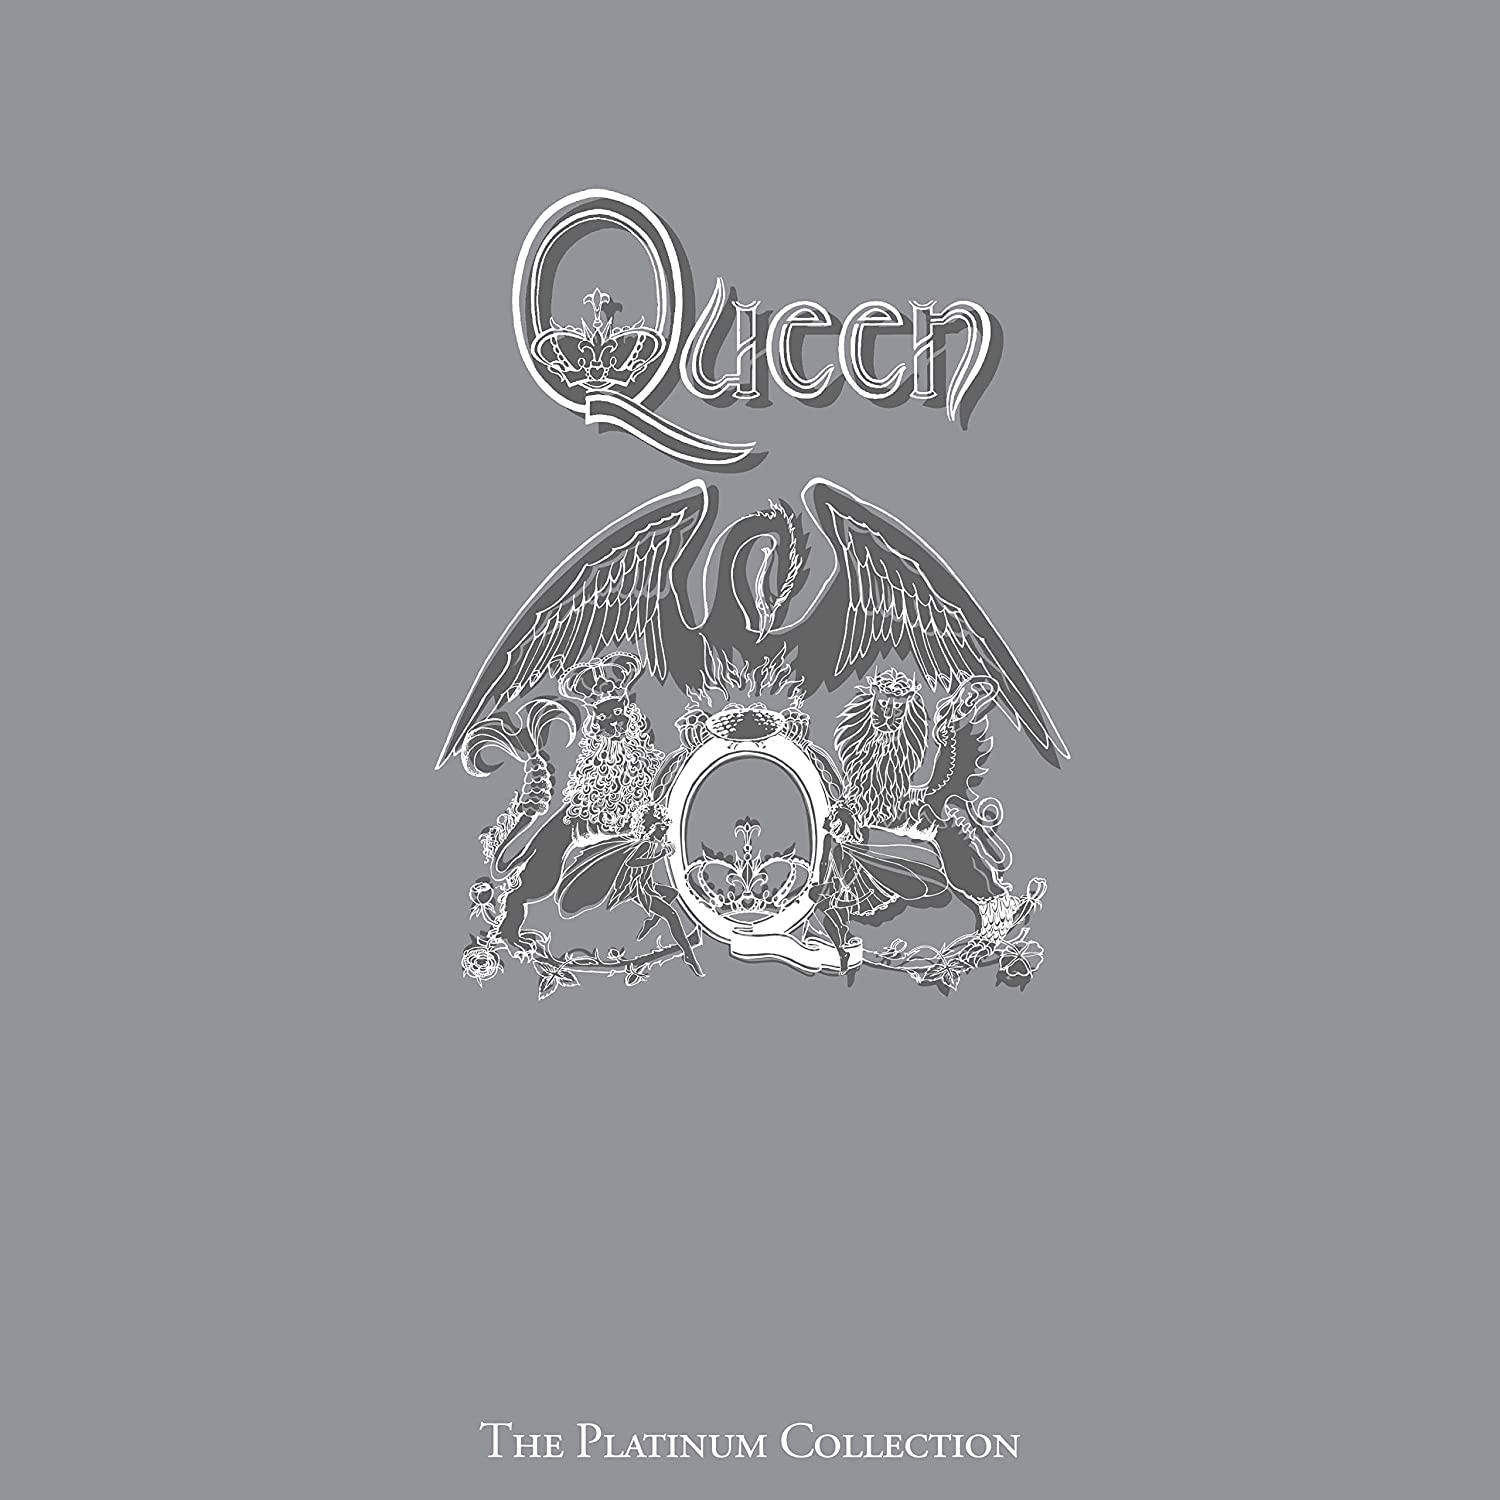 Copertina Vinile 33 giri The Platinum Collection di Queen